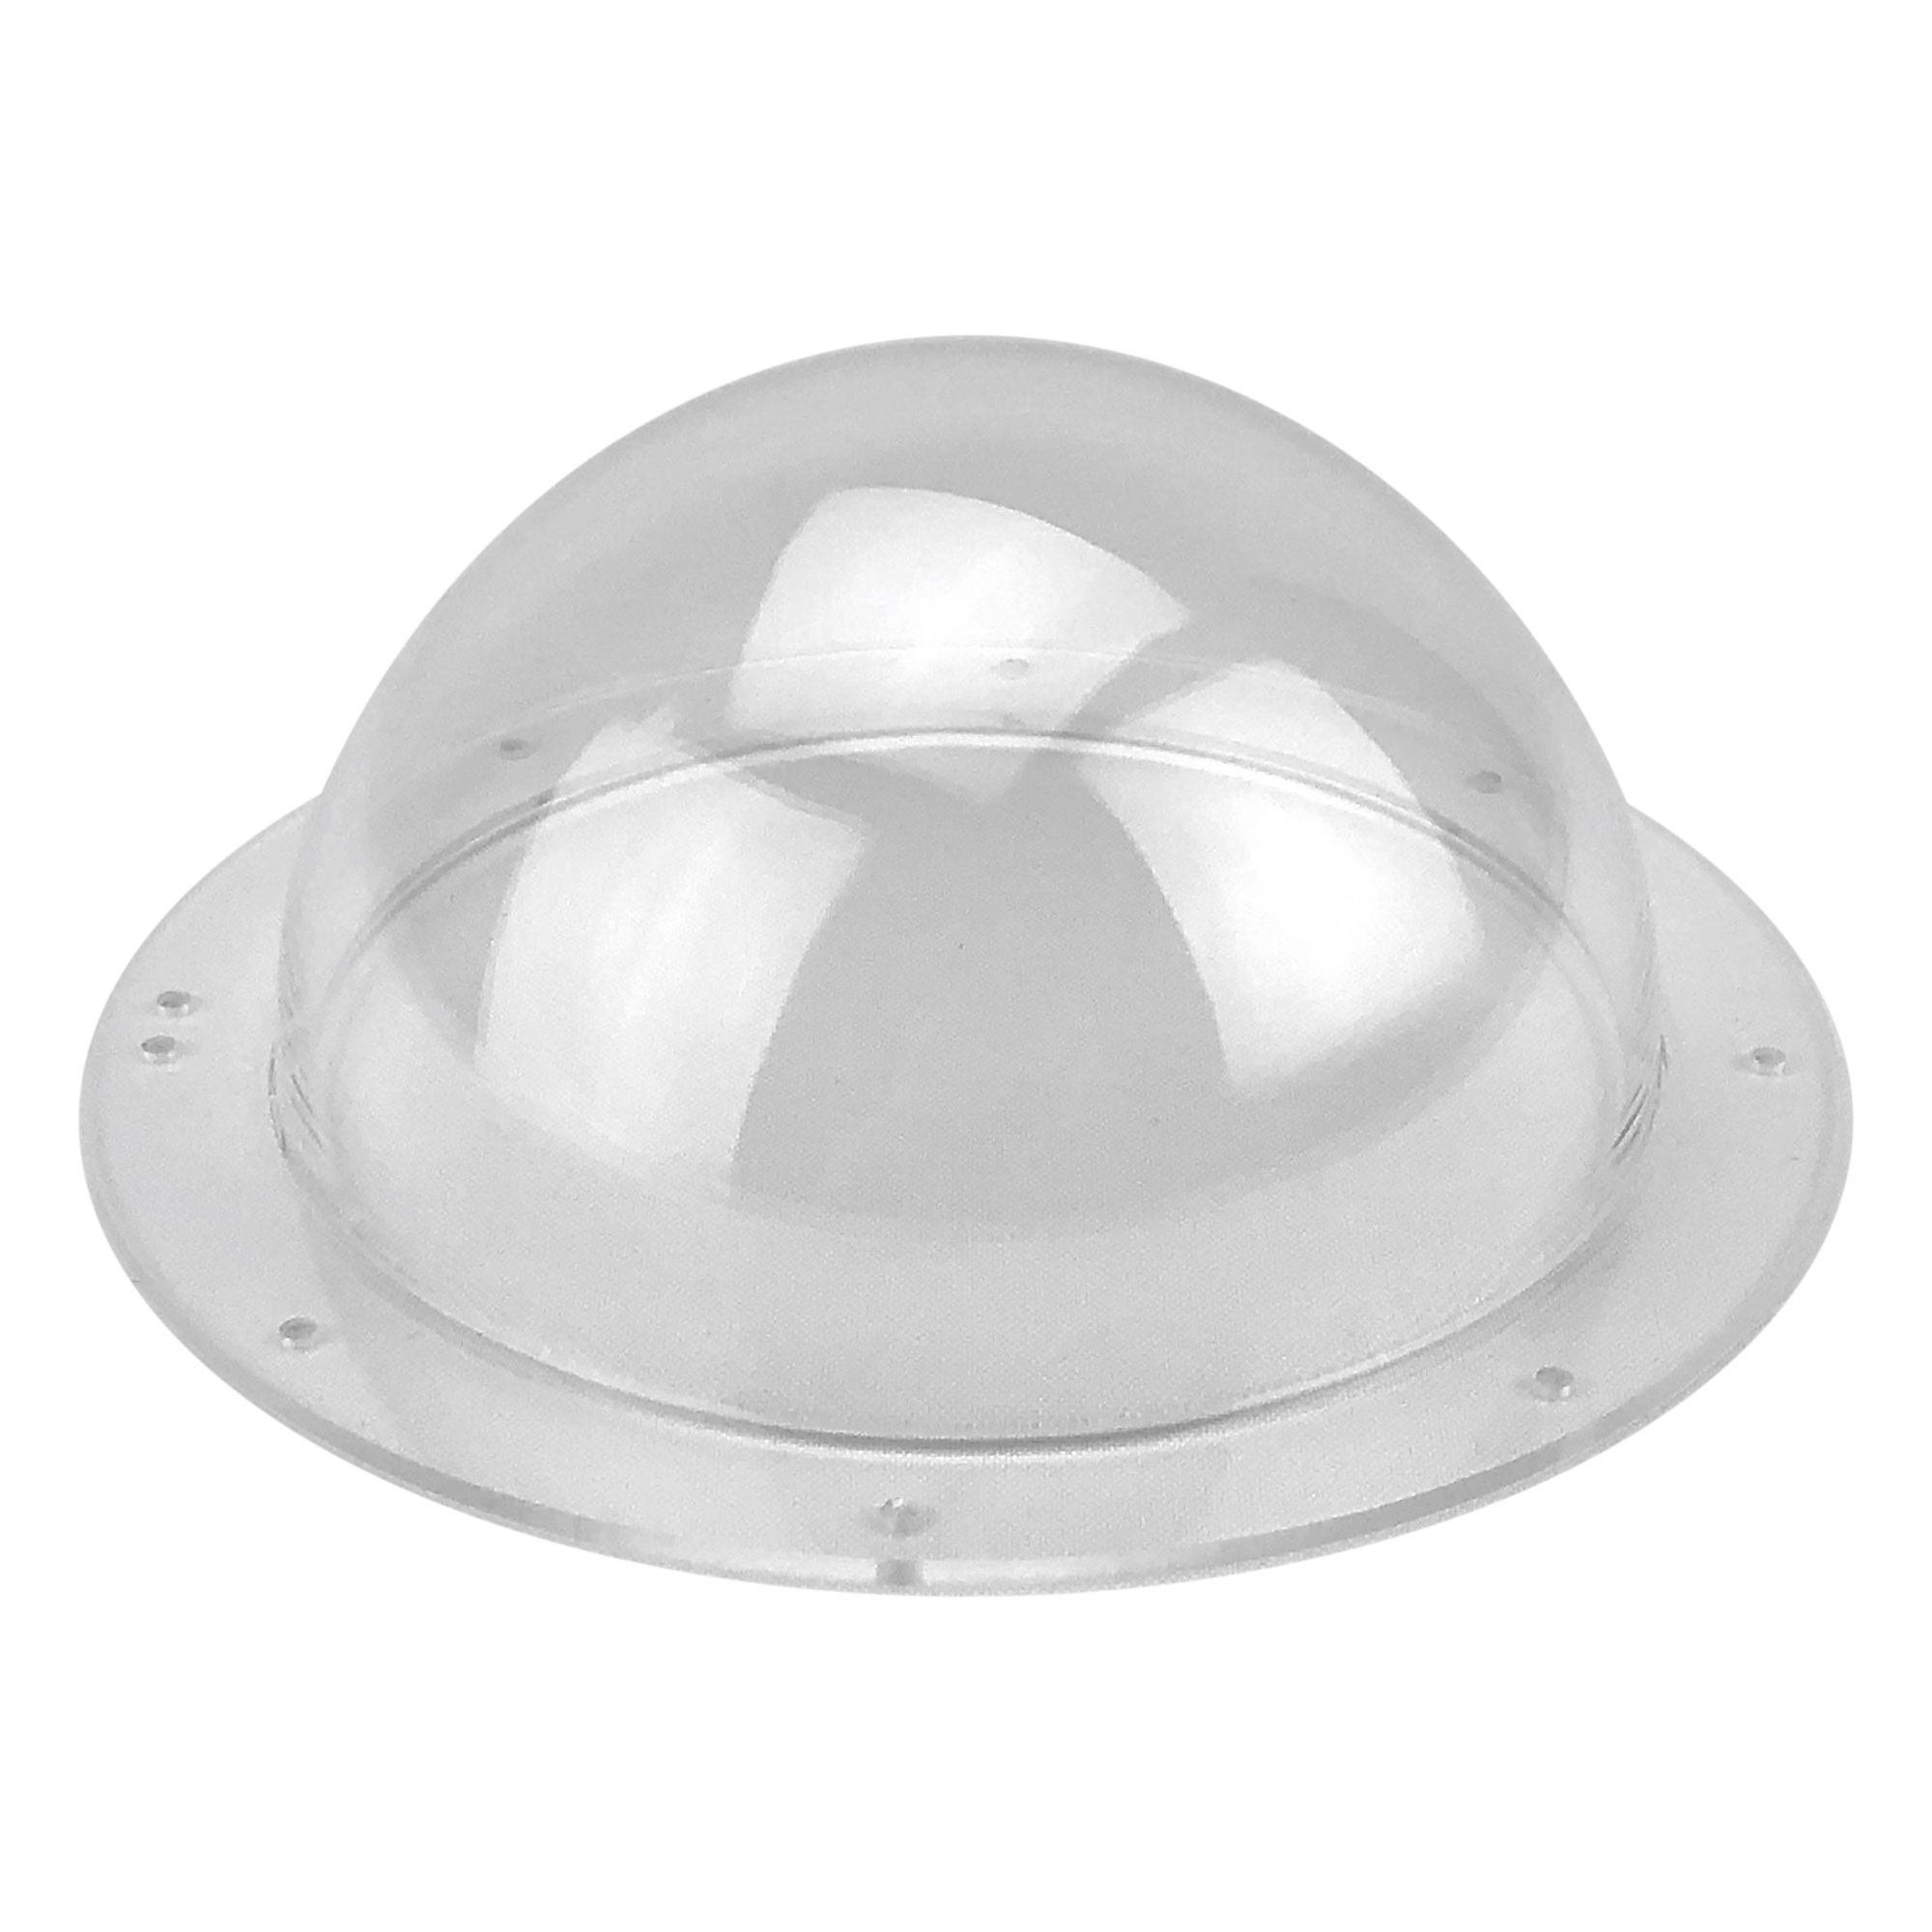 Half Sphere Lens For BASH - Clear Lens Option (AC-HS-LENS-C)